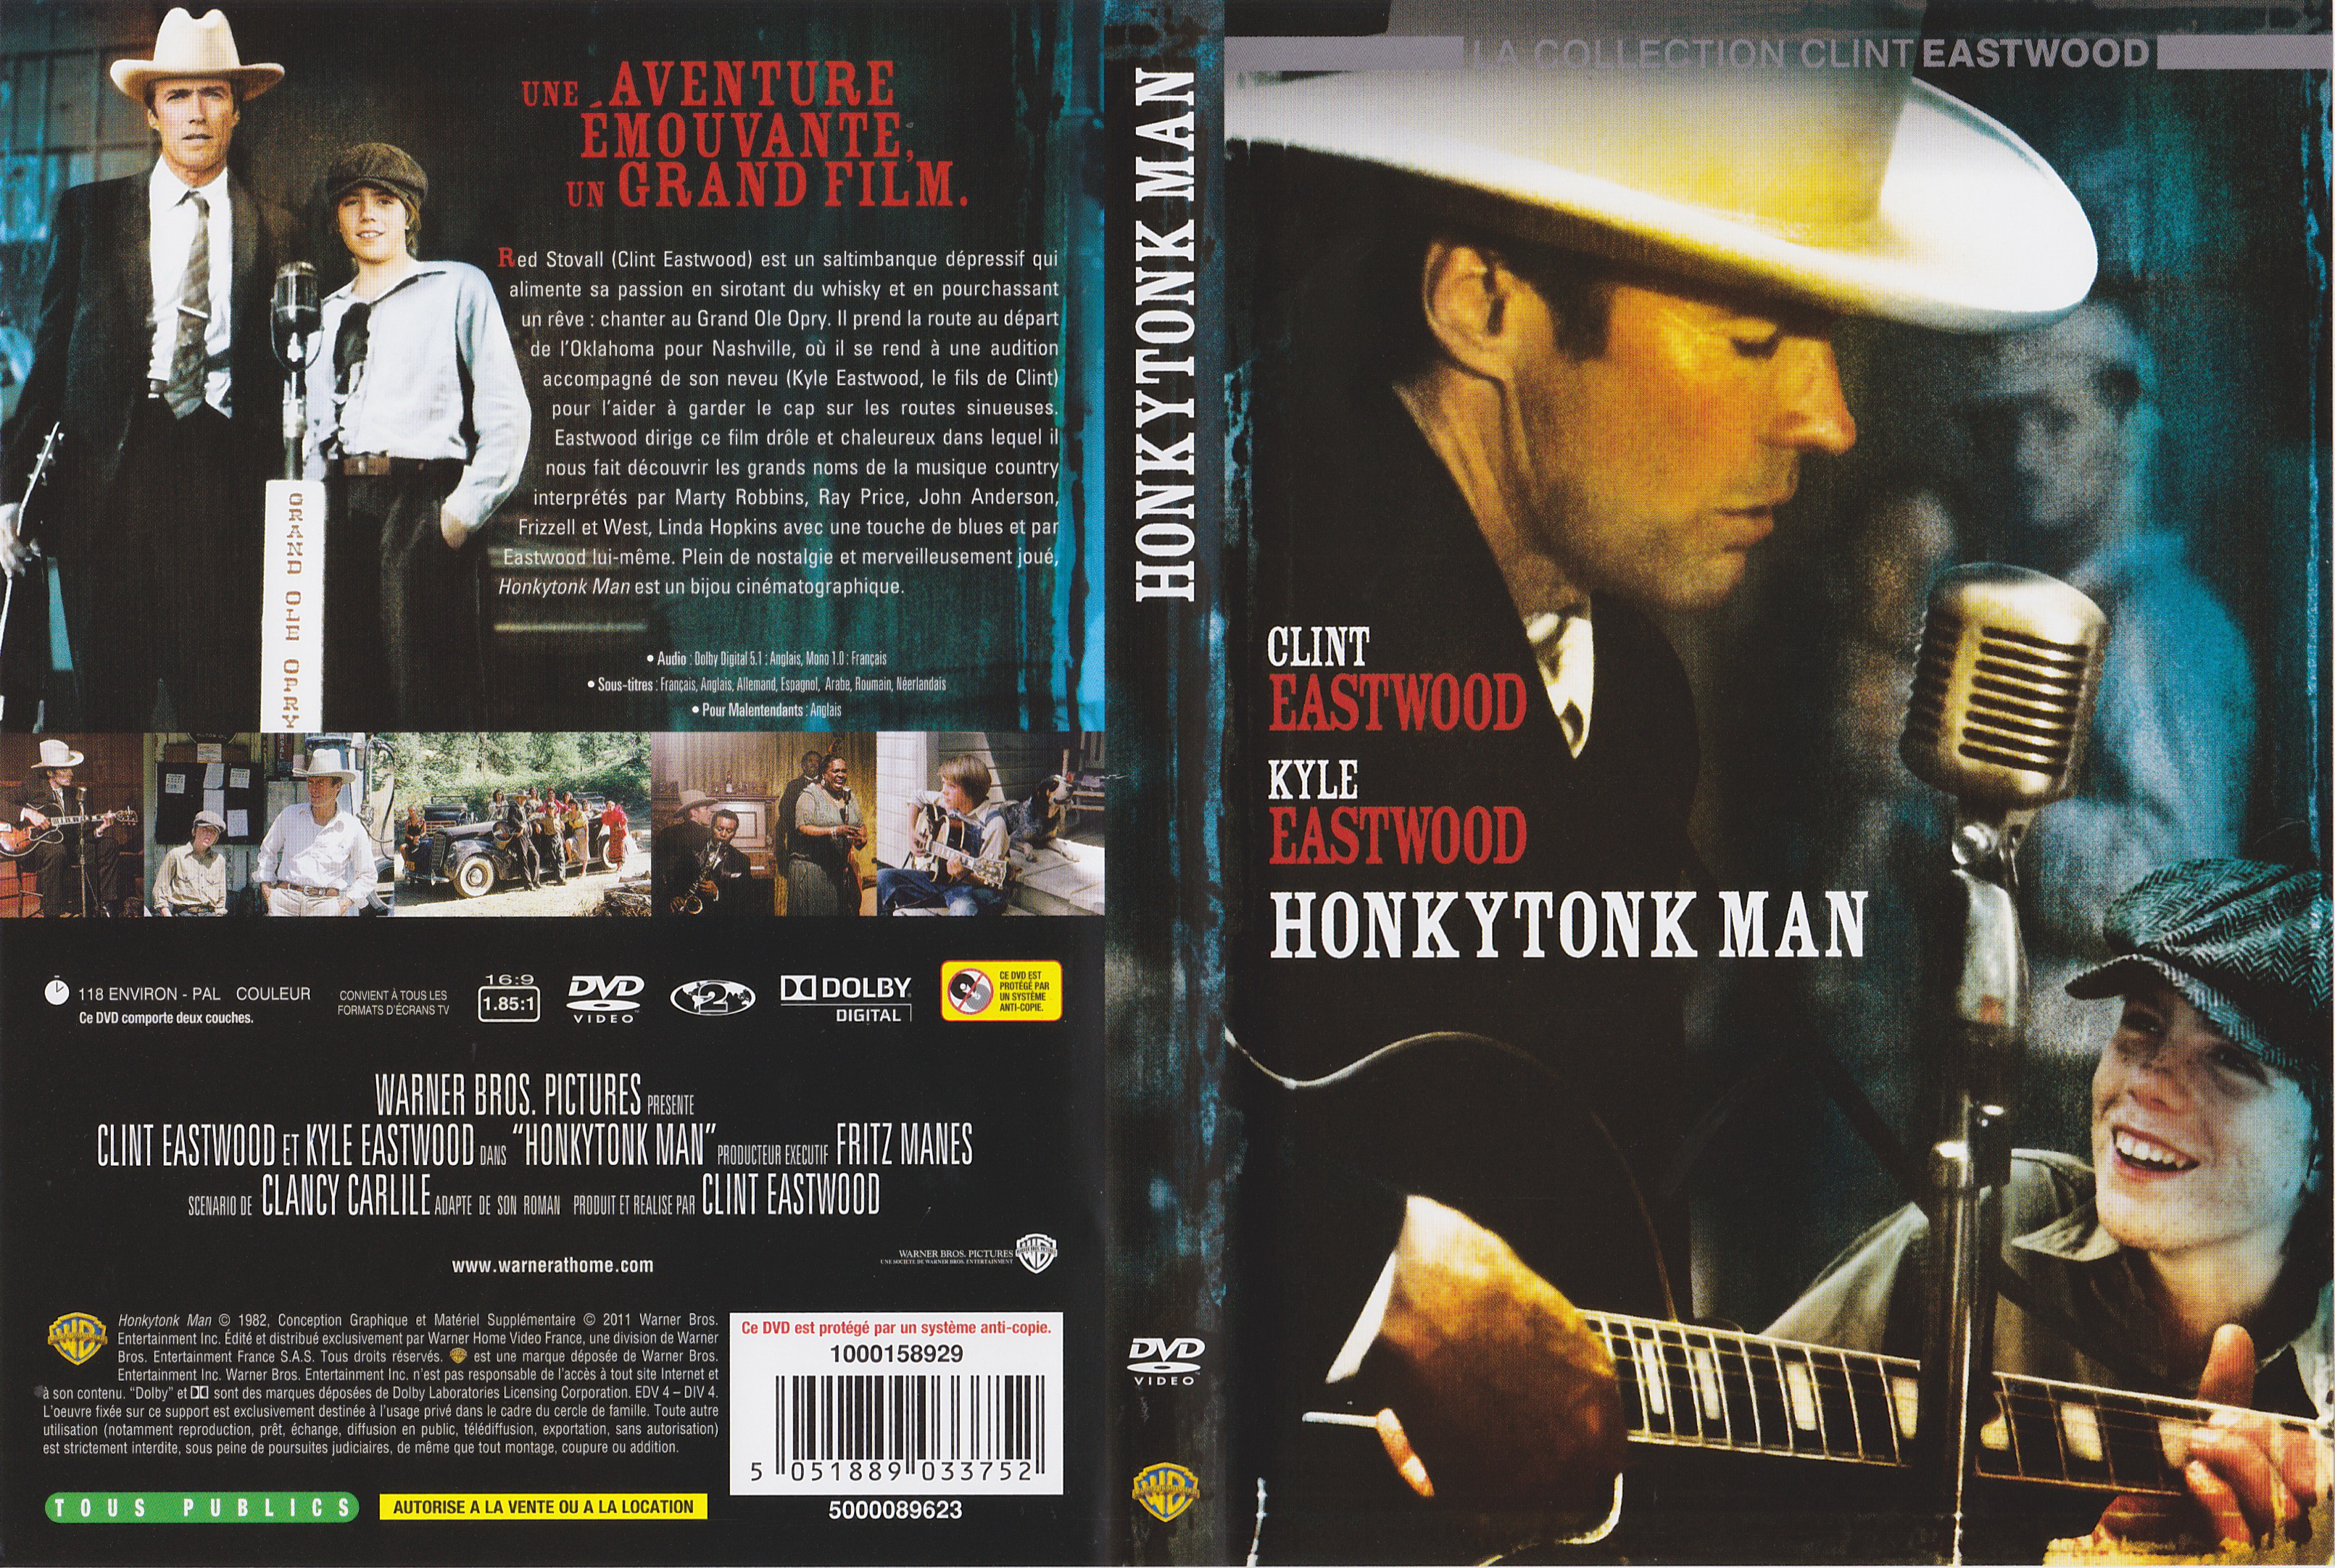 Jaquette DVD Honkytonk Man v3